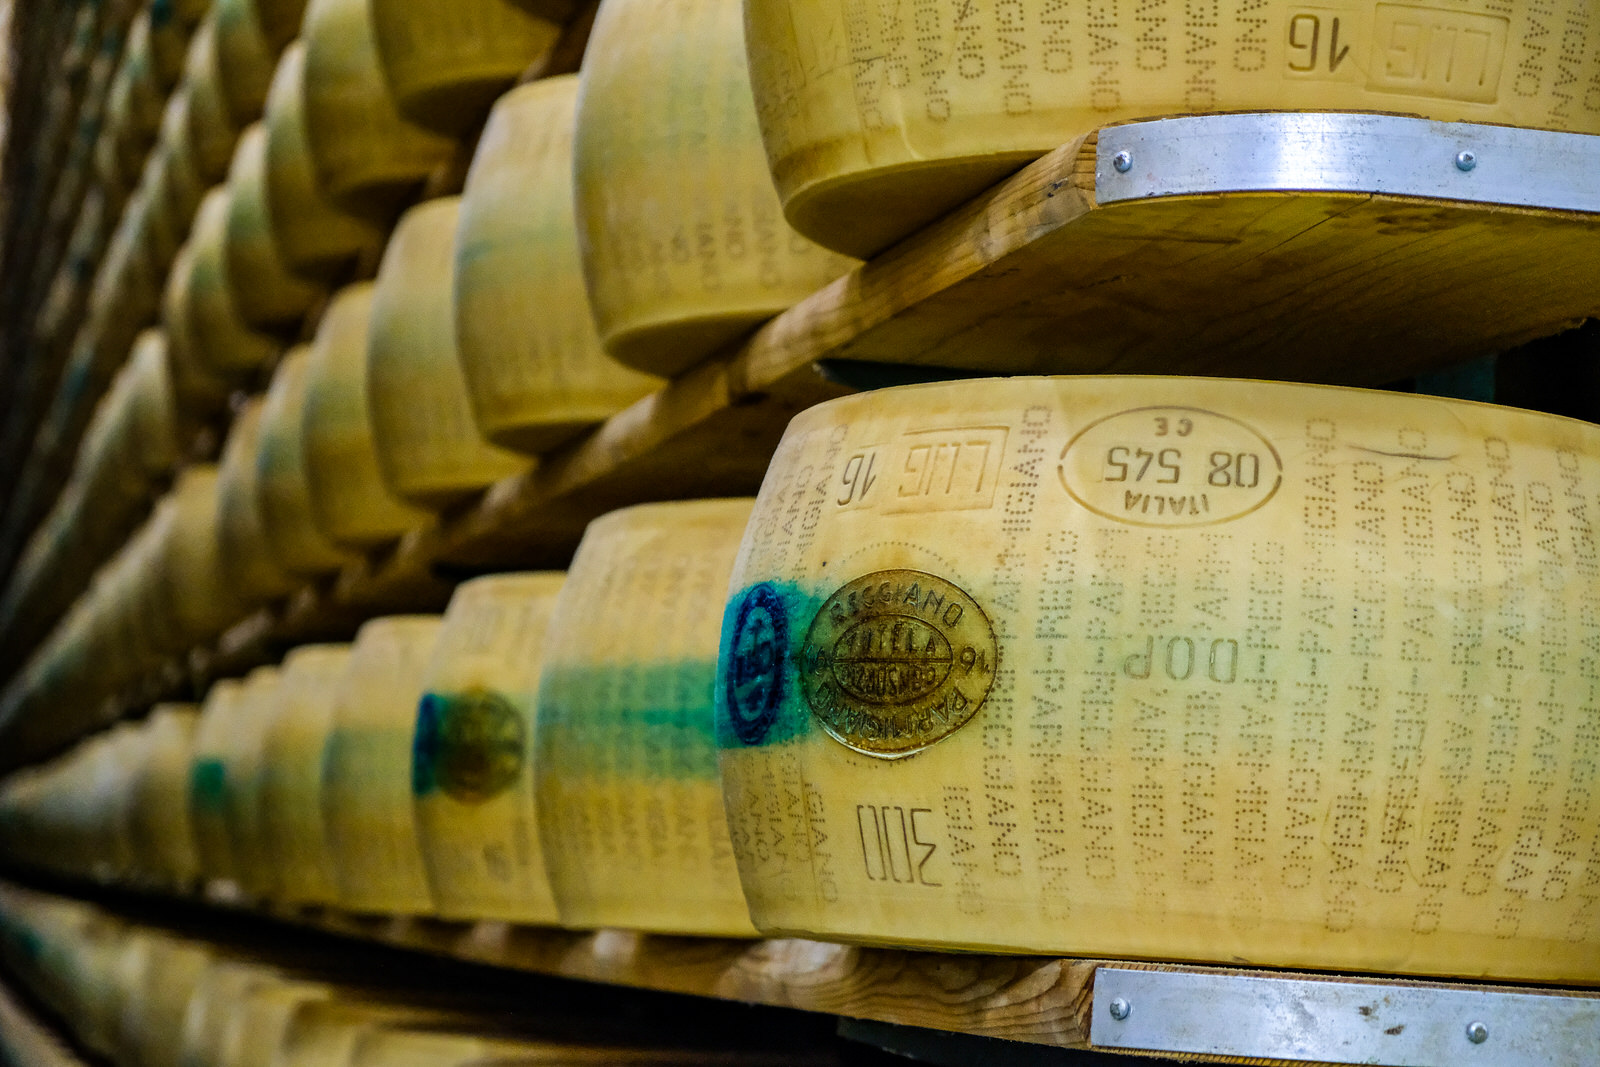 Exploring Italy's famous food region - Parmigiano Reggiano wheels of cheese